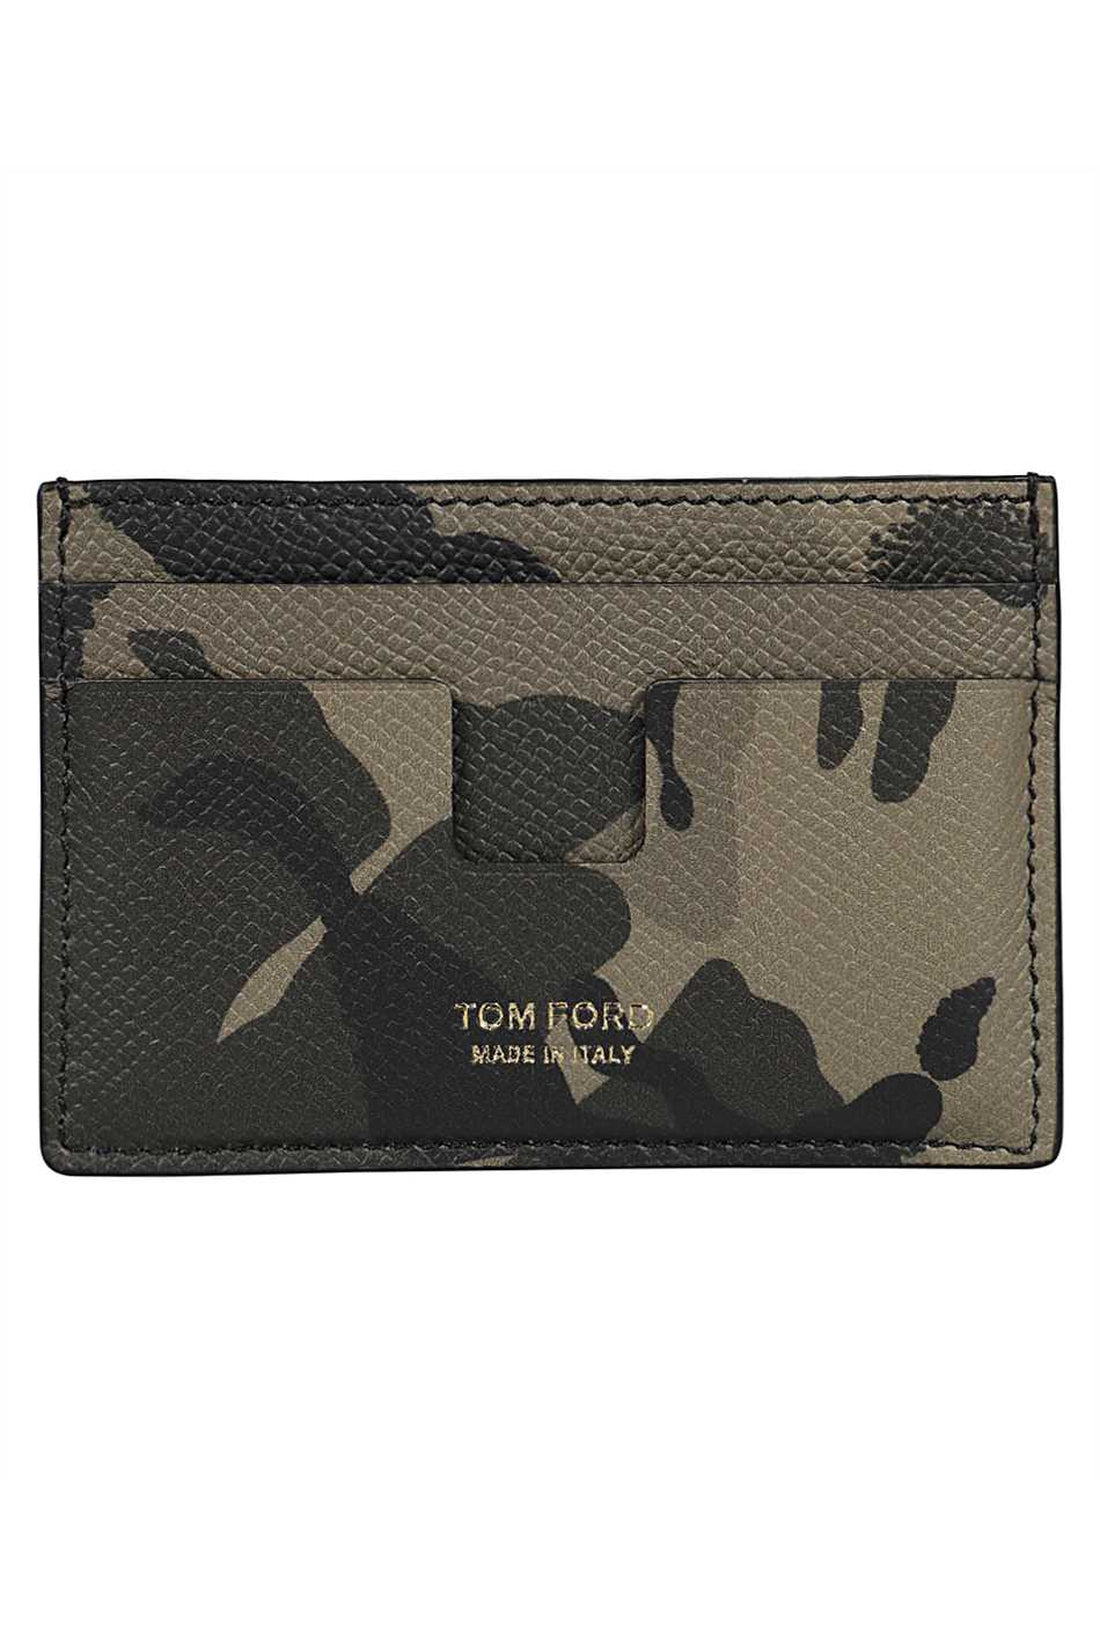 Tom Ford-OUTLET-SALE-Printed leather card holder-ARCHIVIST